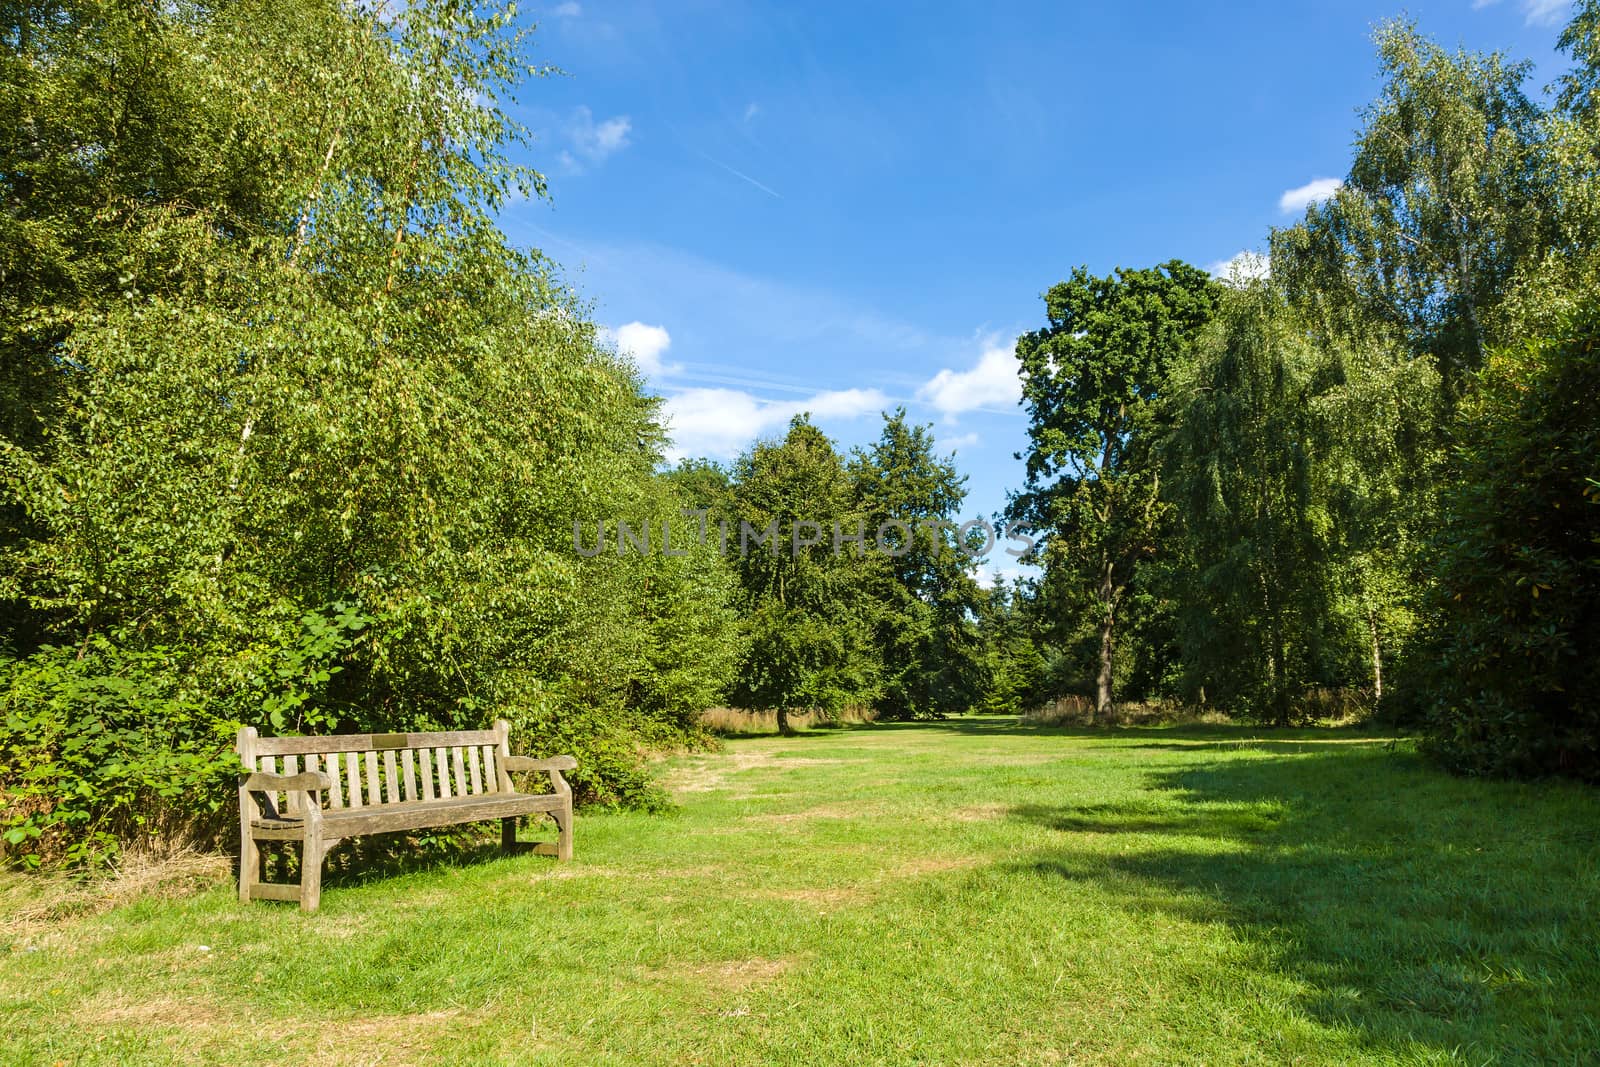 Park Bench in Beautiful Lush Green Garden by scheriton